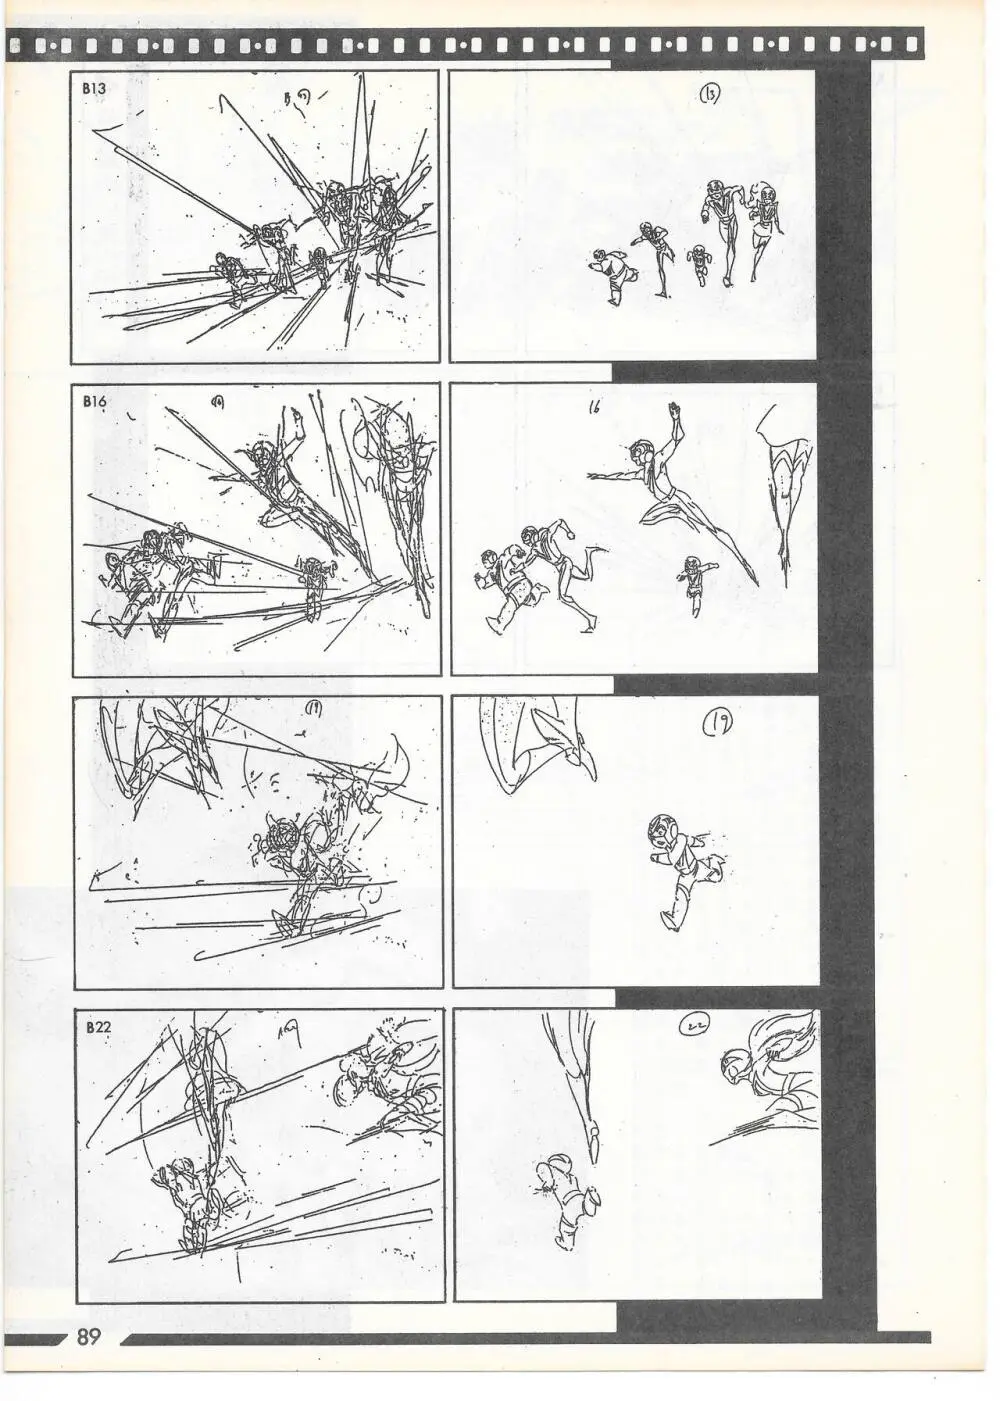 THE ANIMATOR 1 金田伊功特集号 - page86